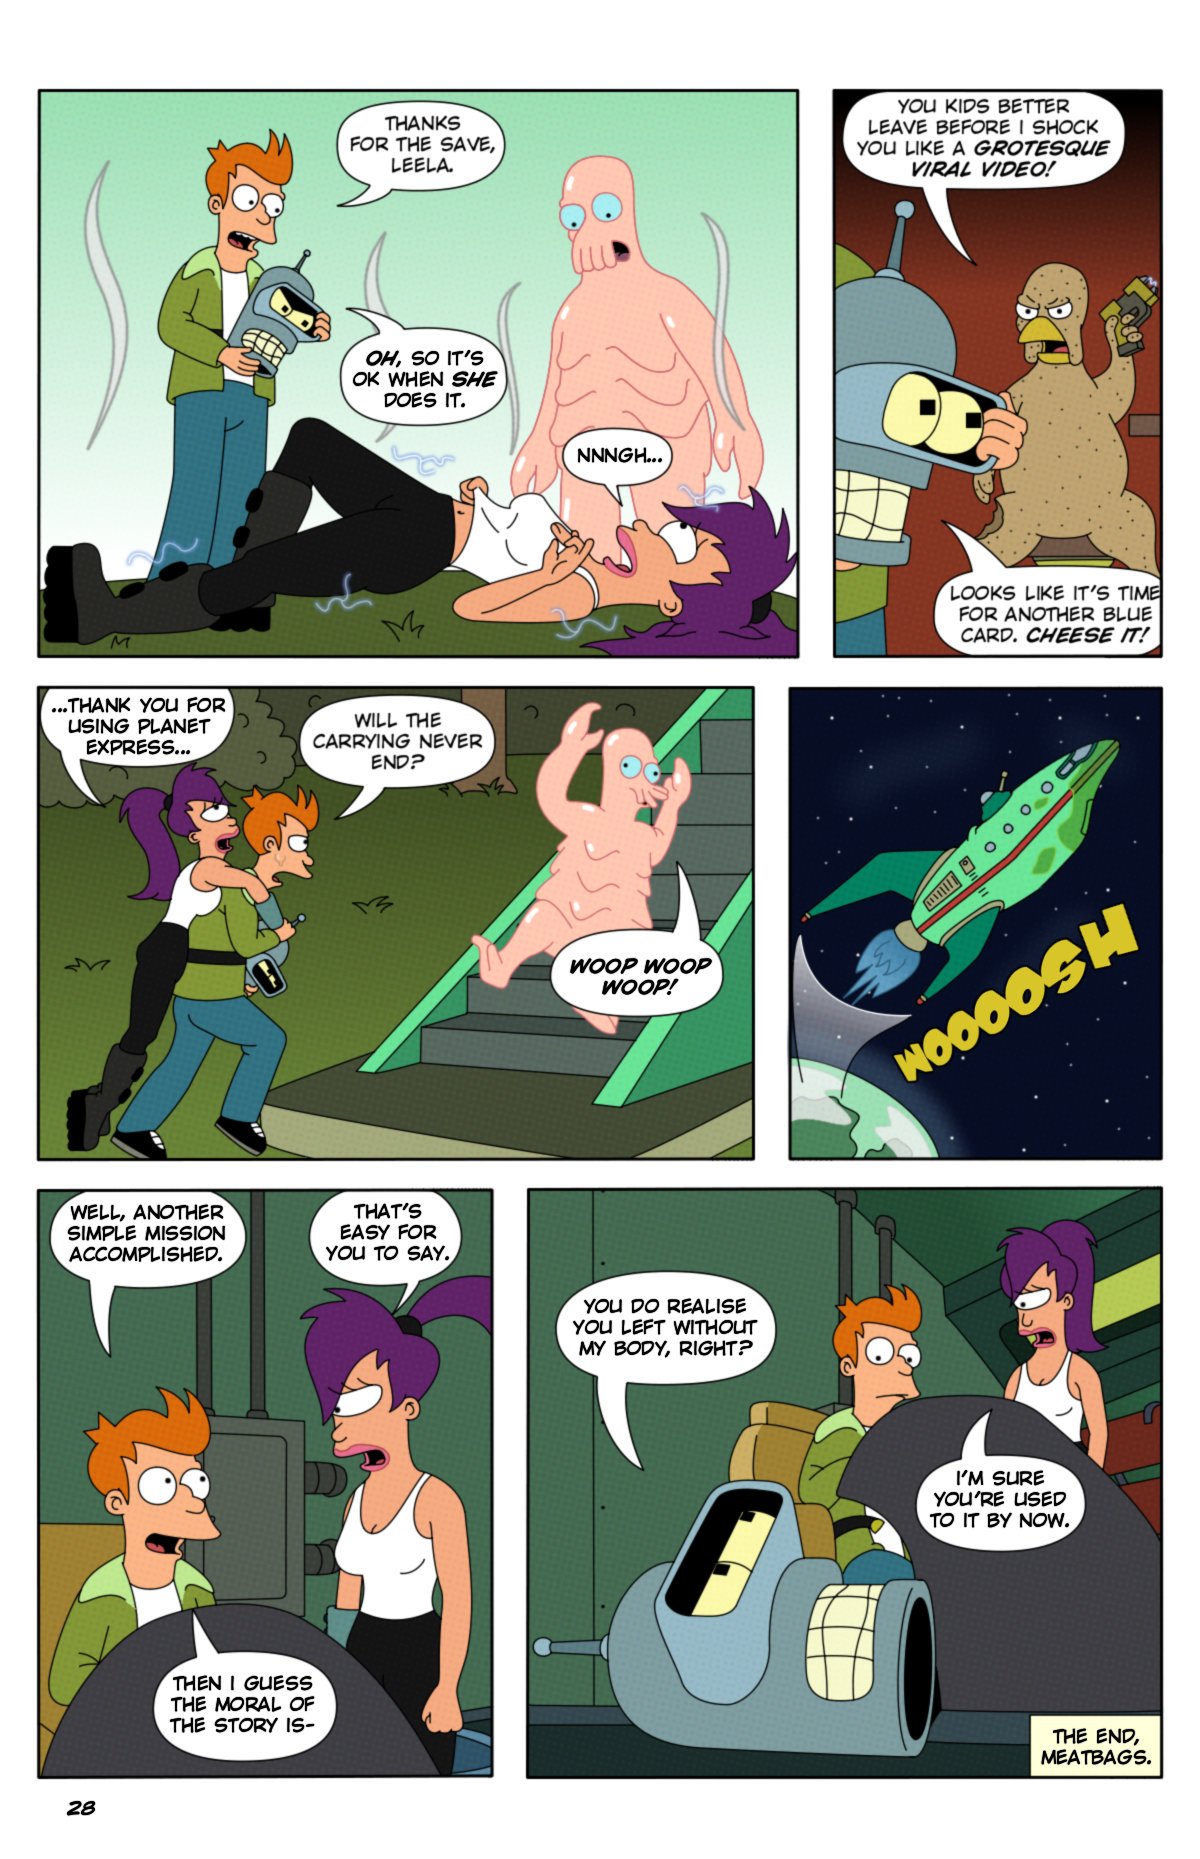 futurama the surrogate mutant - page 30